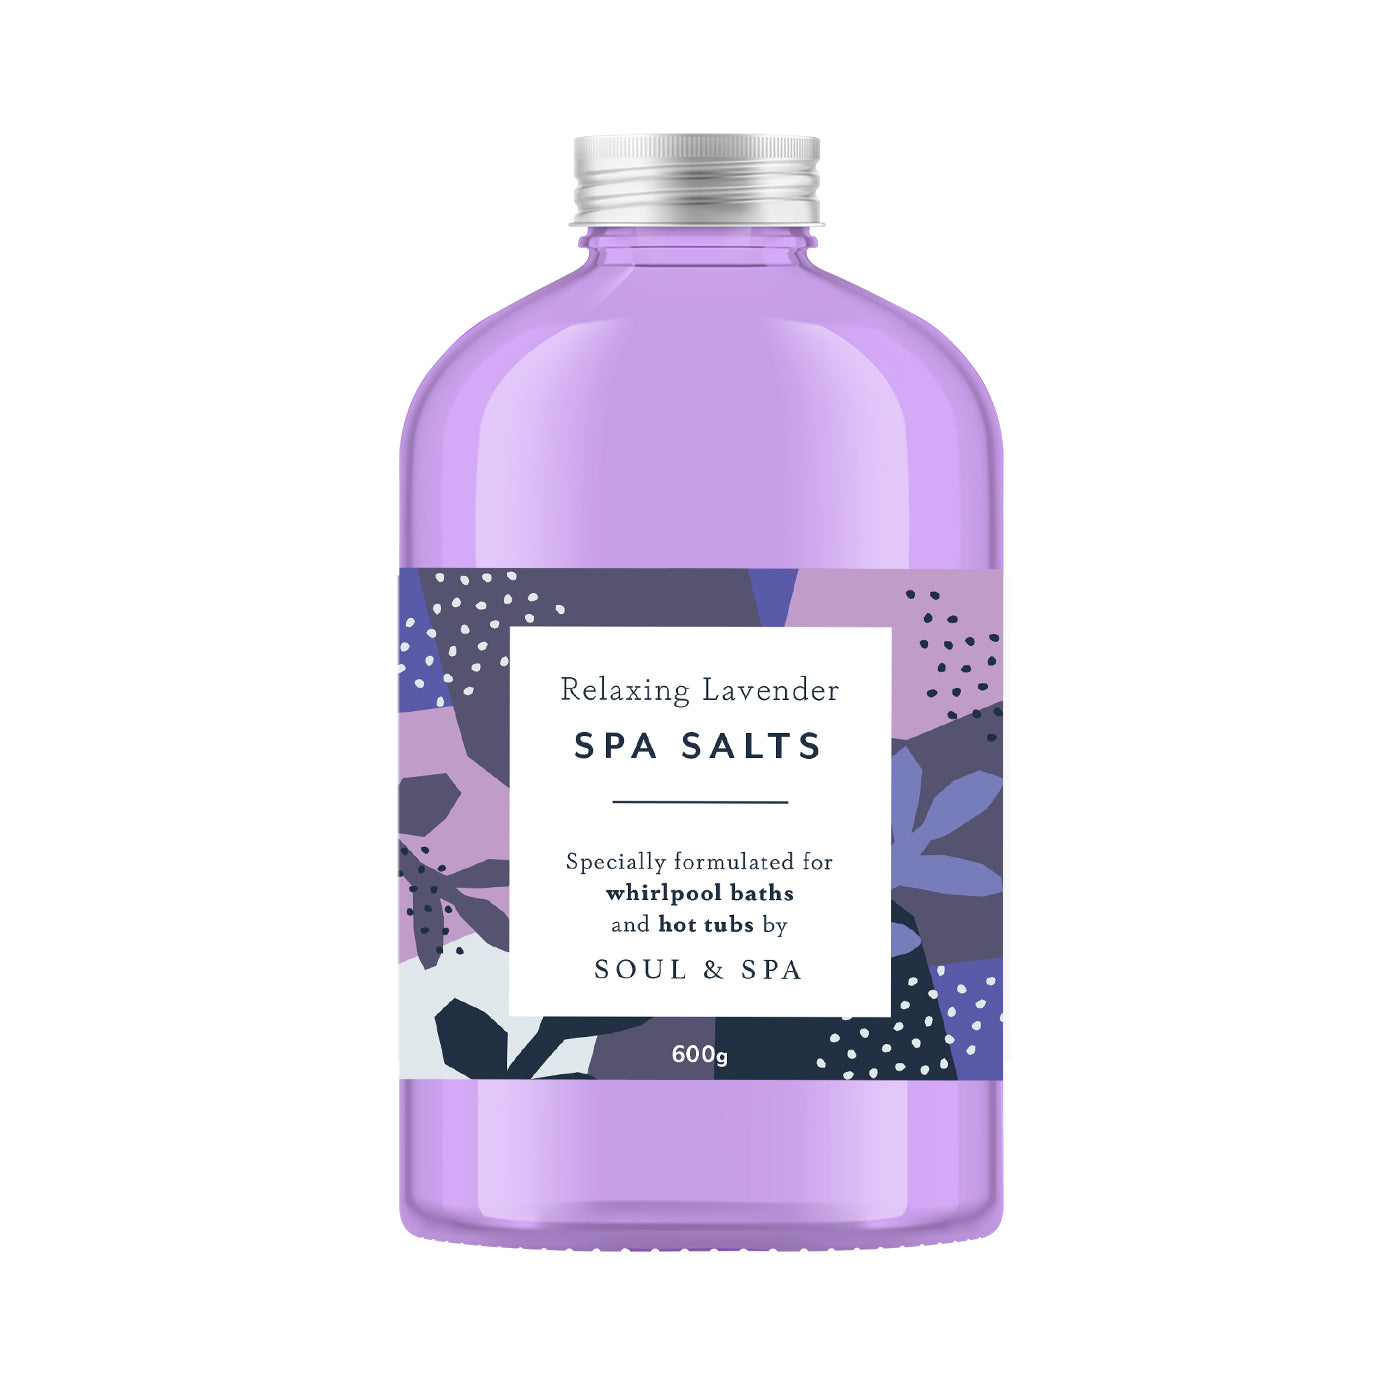 Relaxing Lavender Spa Salts